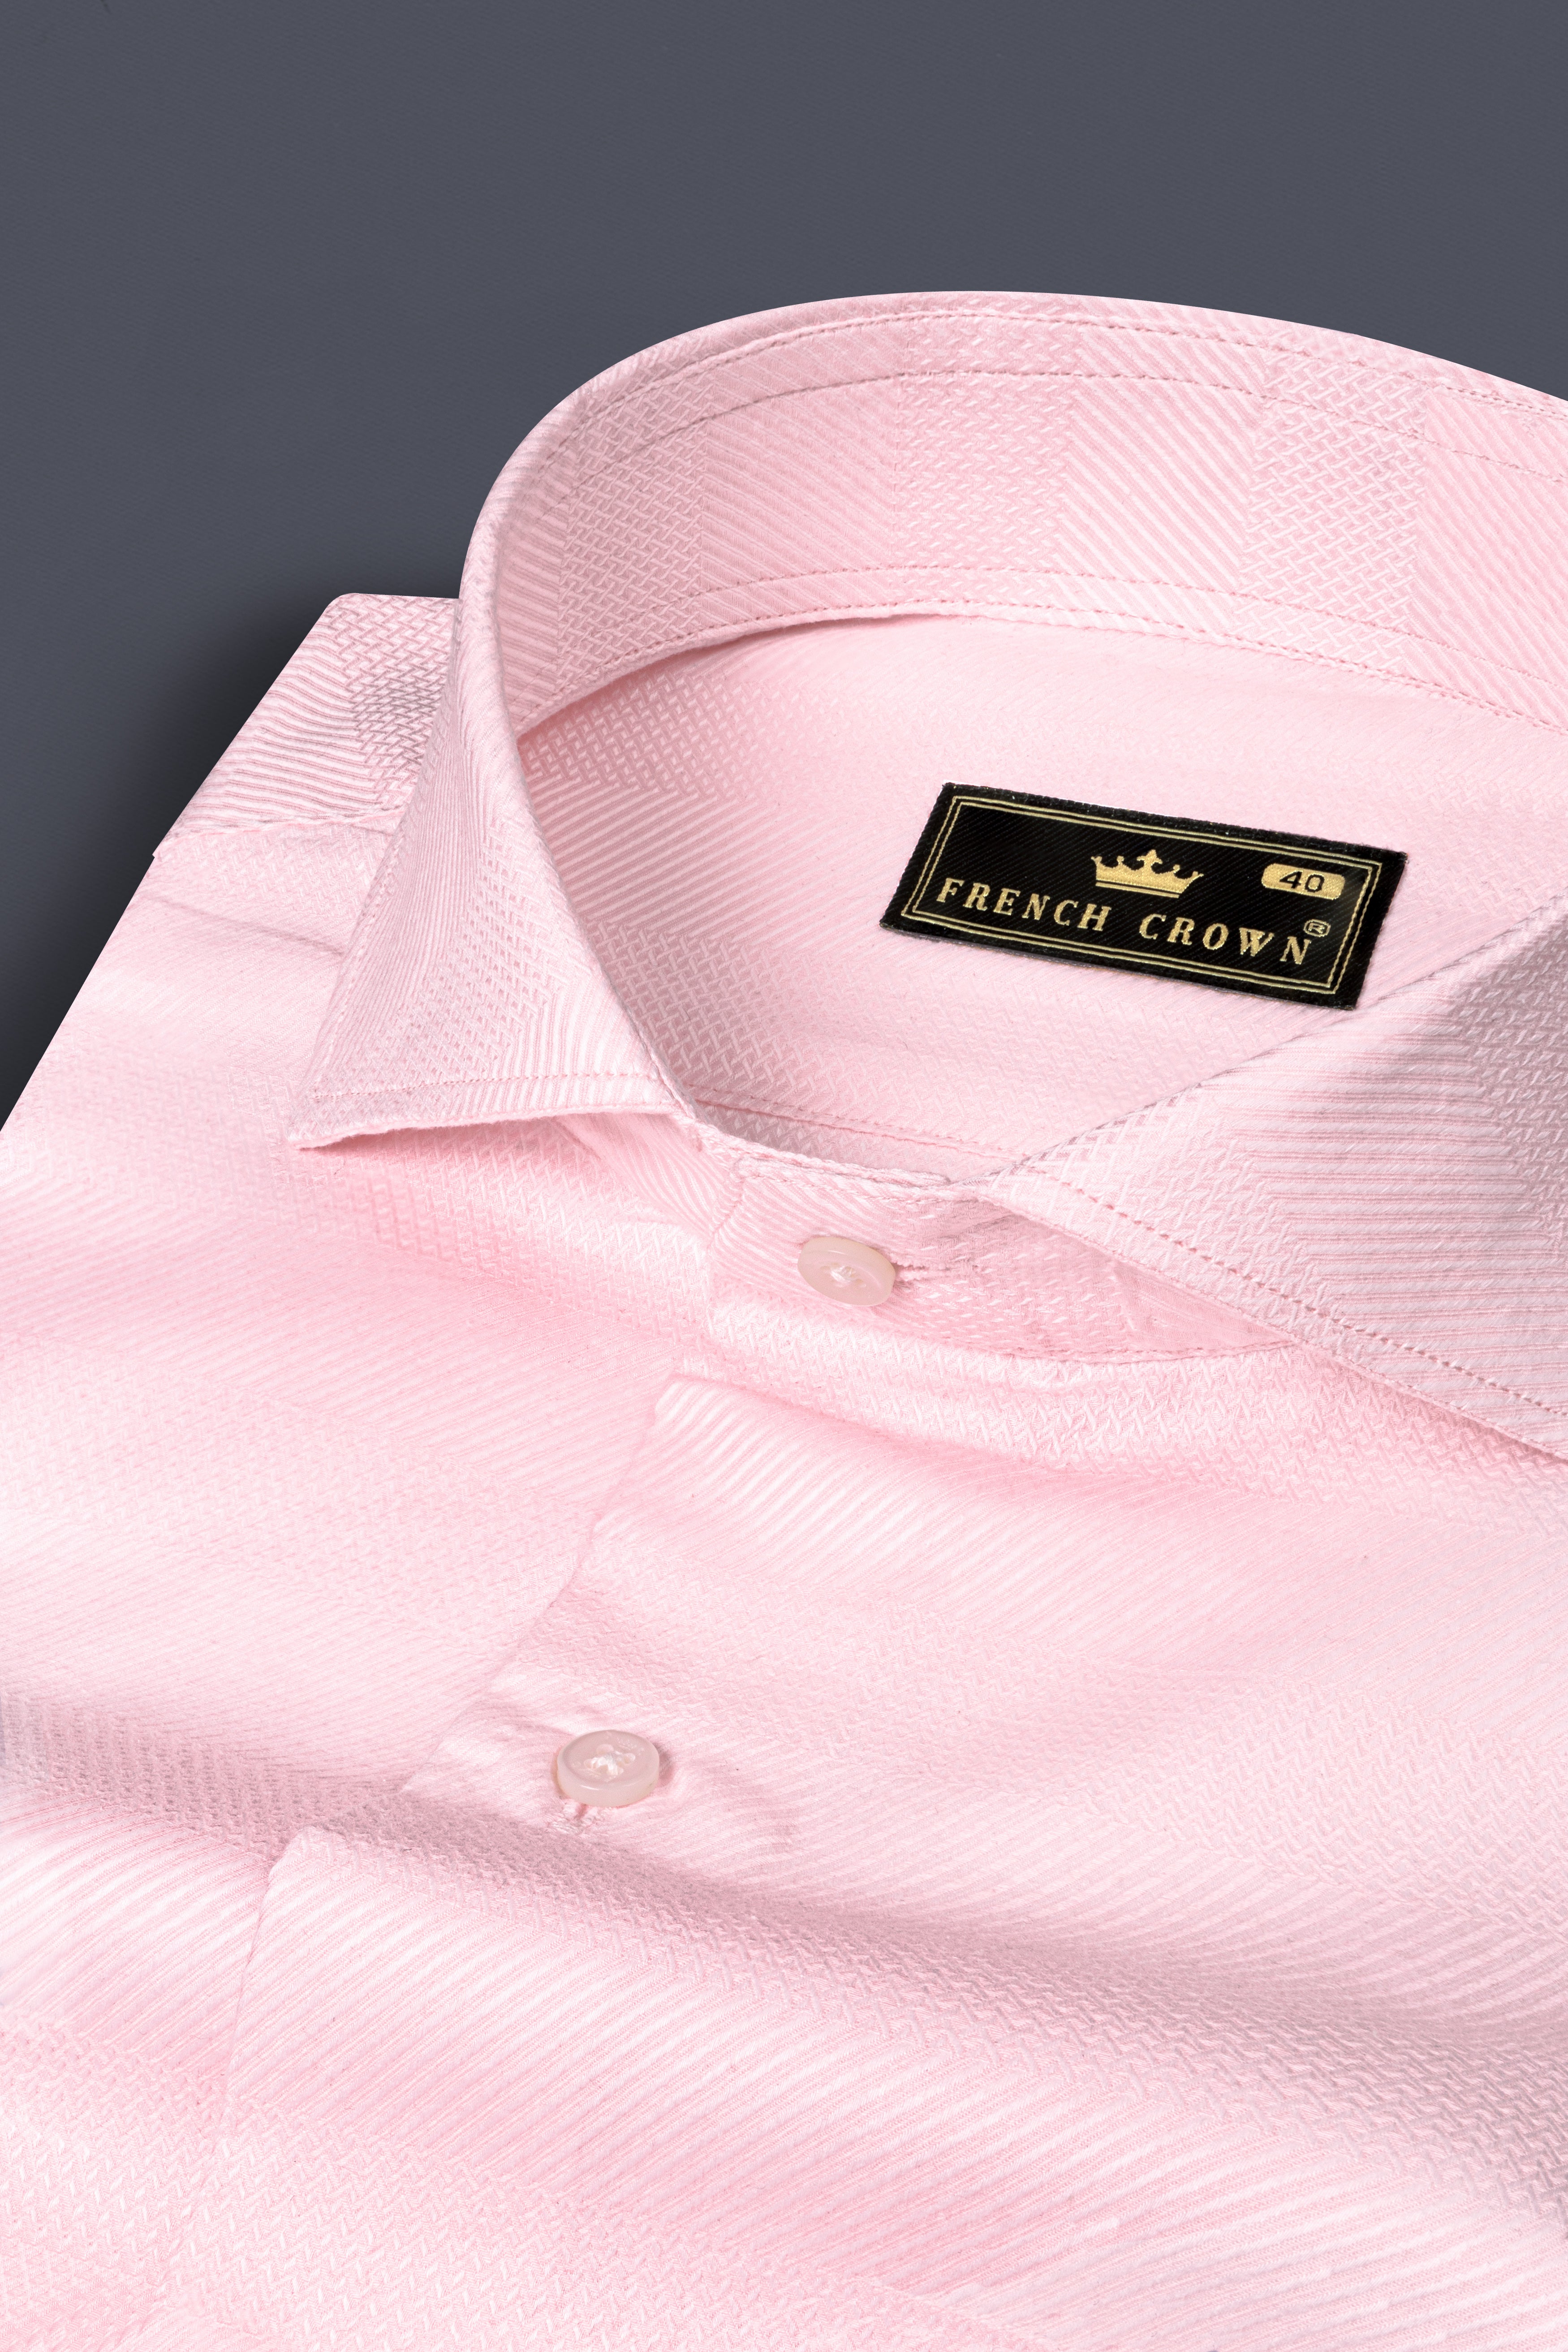 Carousel Pink Dobby Textured Premium Cotton Shirt